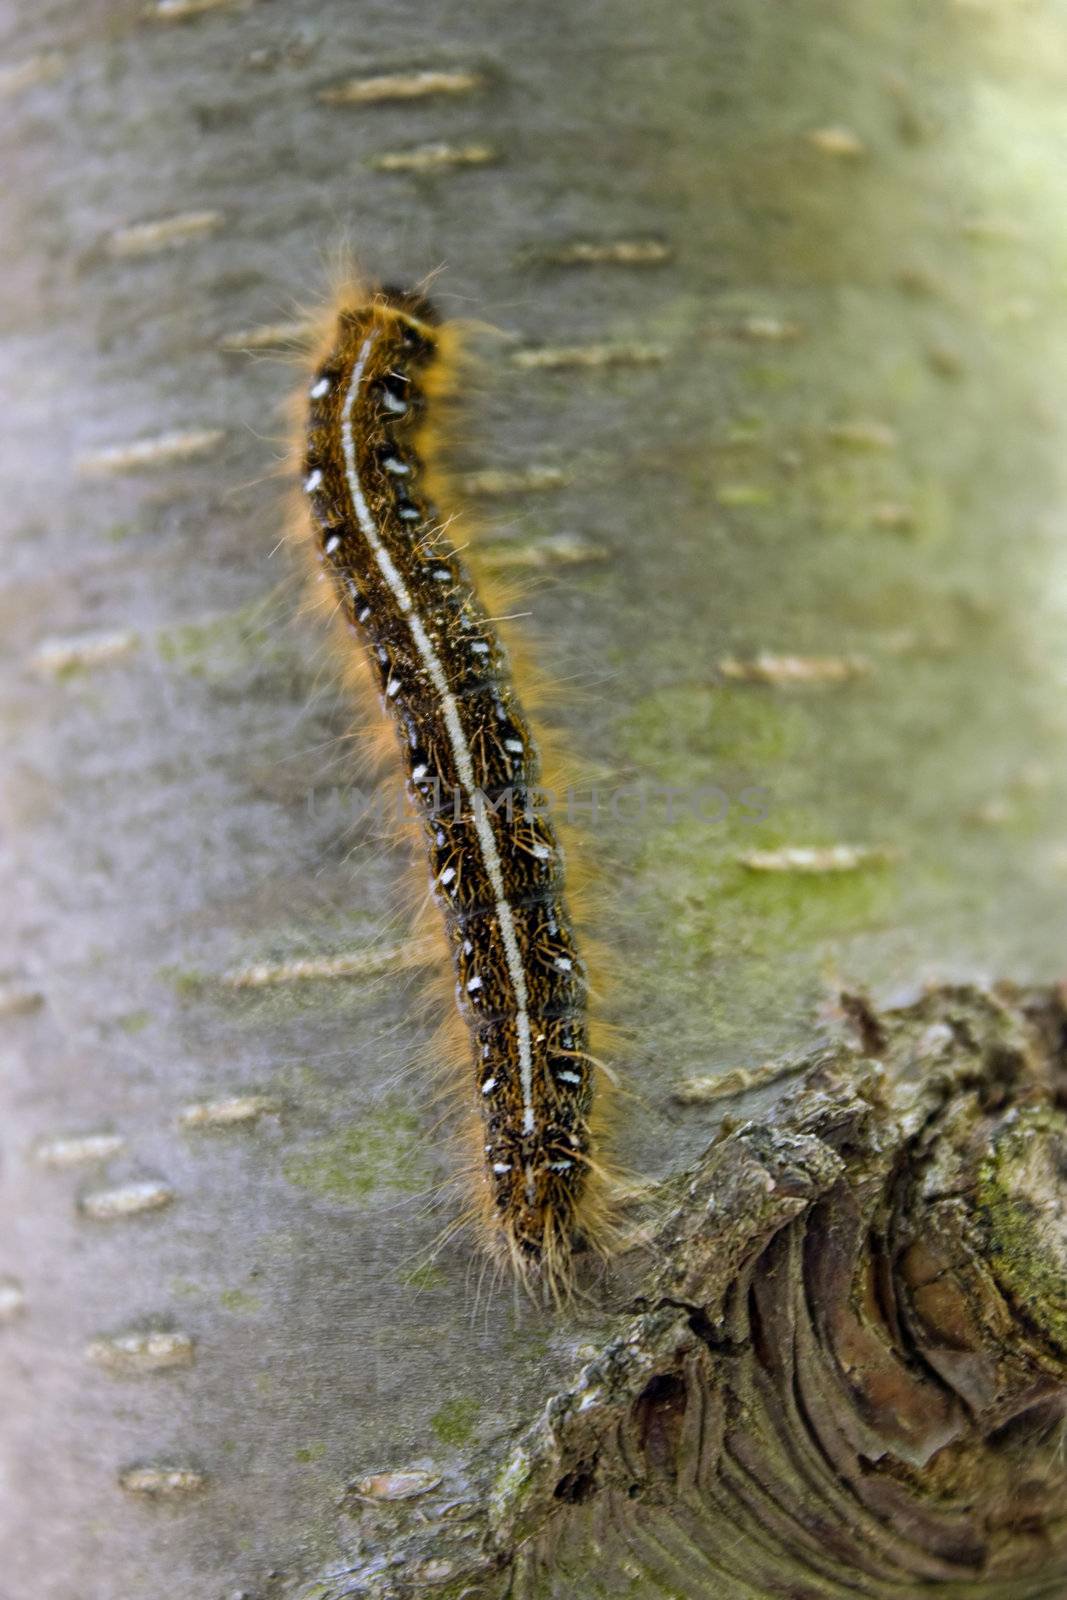 A closeup of a caterpillar climbing up the side of a tree.